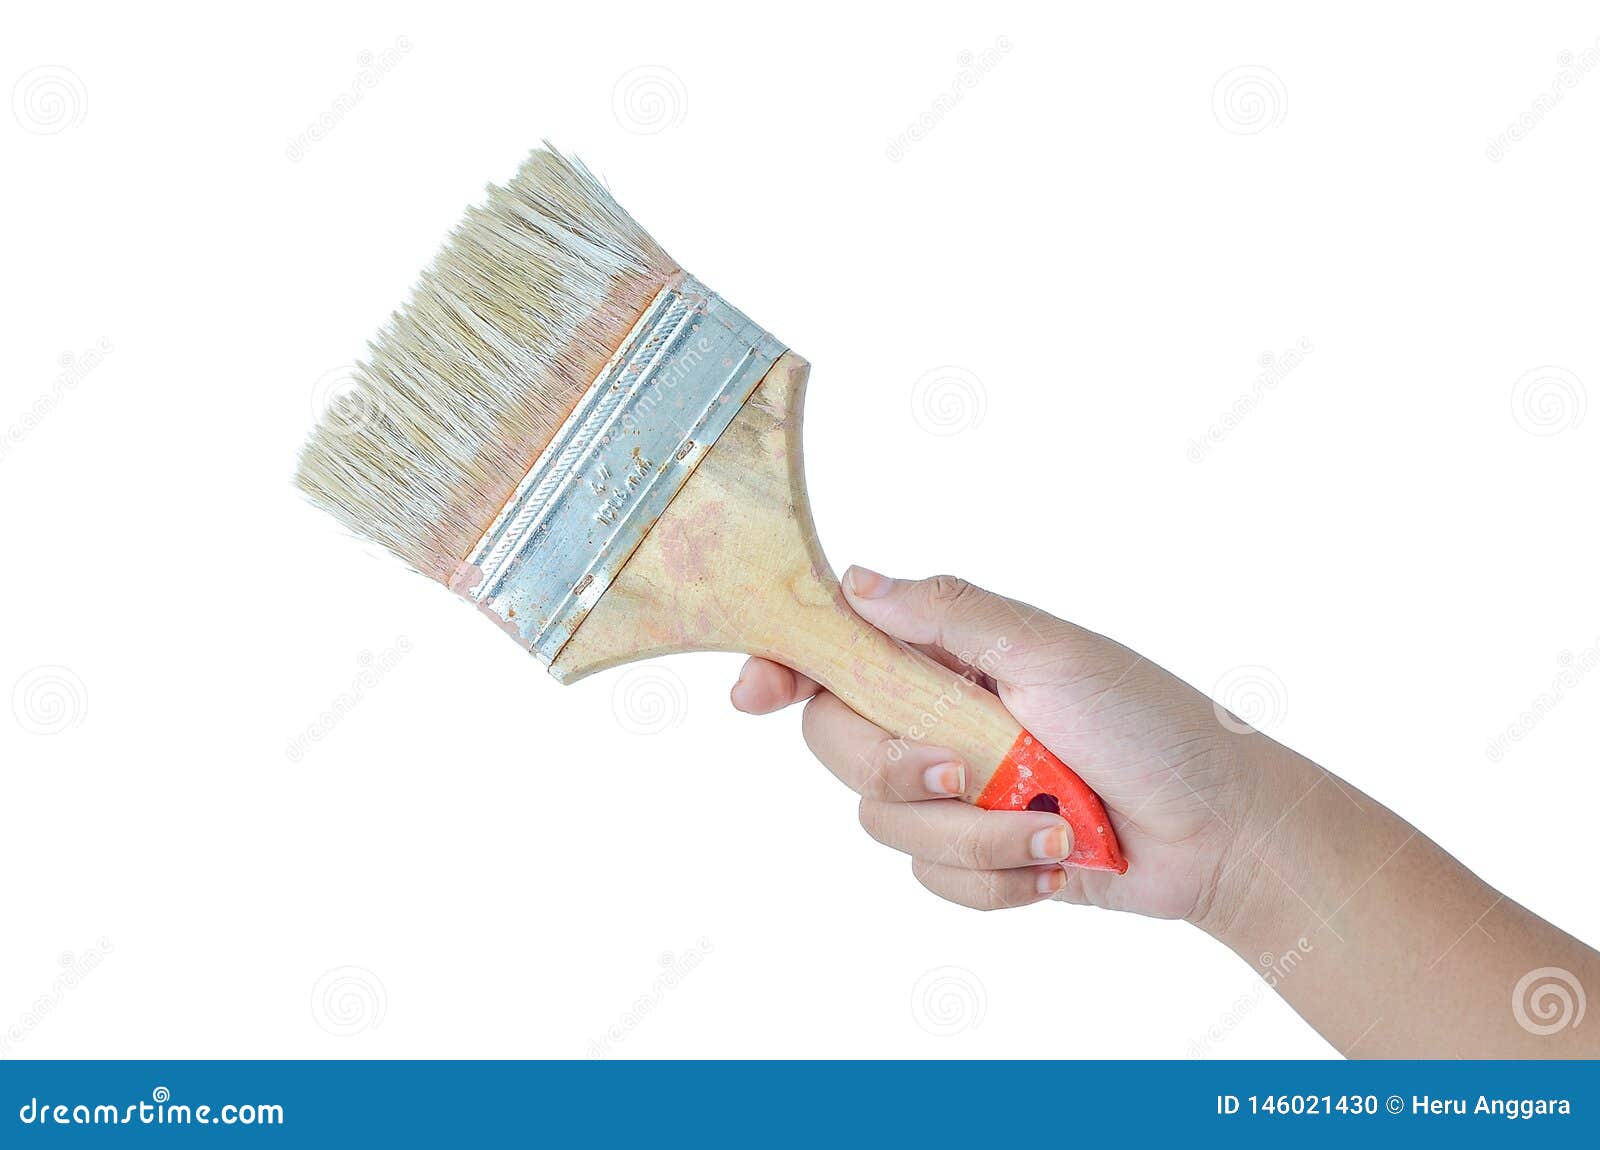 Hand holding paint brush, Stock image